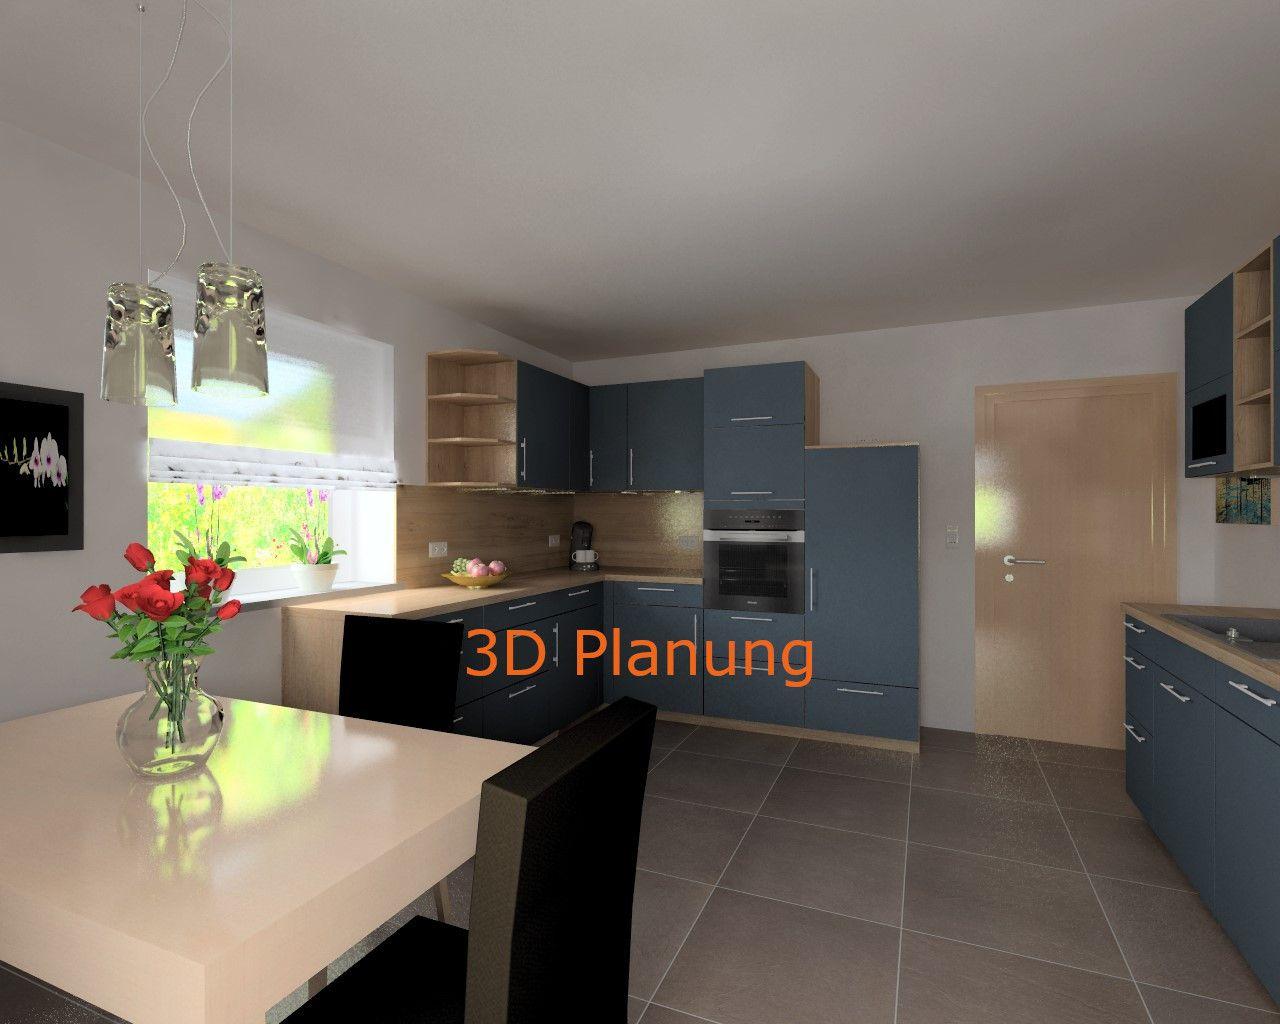 Pflaum - 3D-Planung 1.jpg